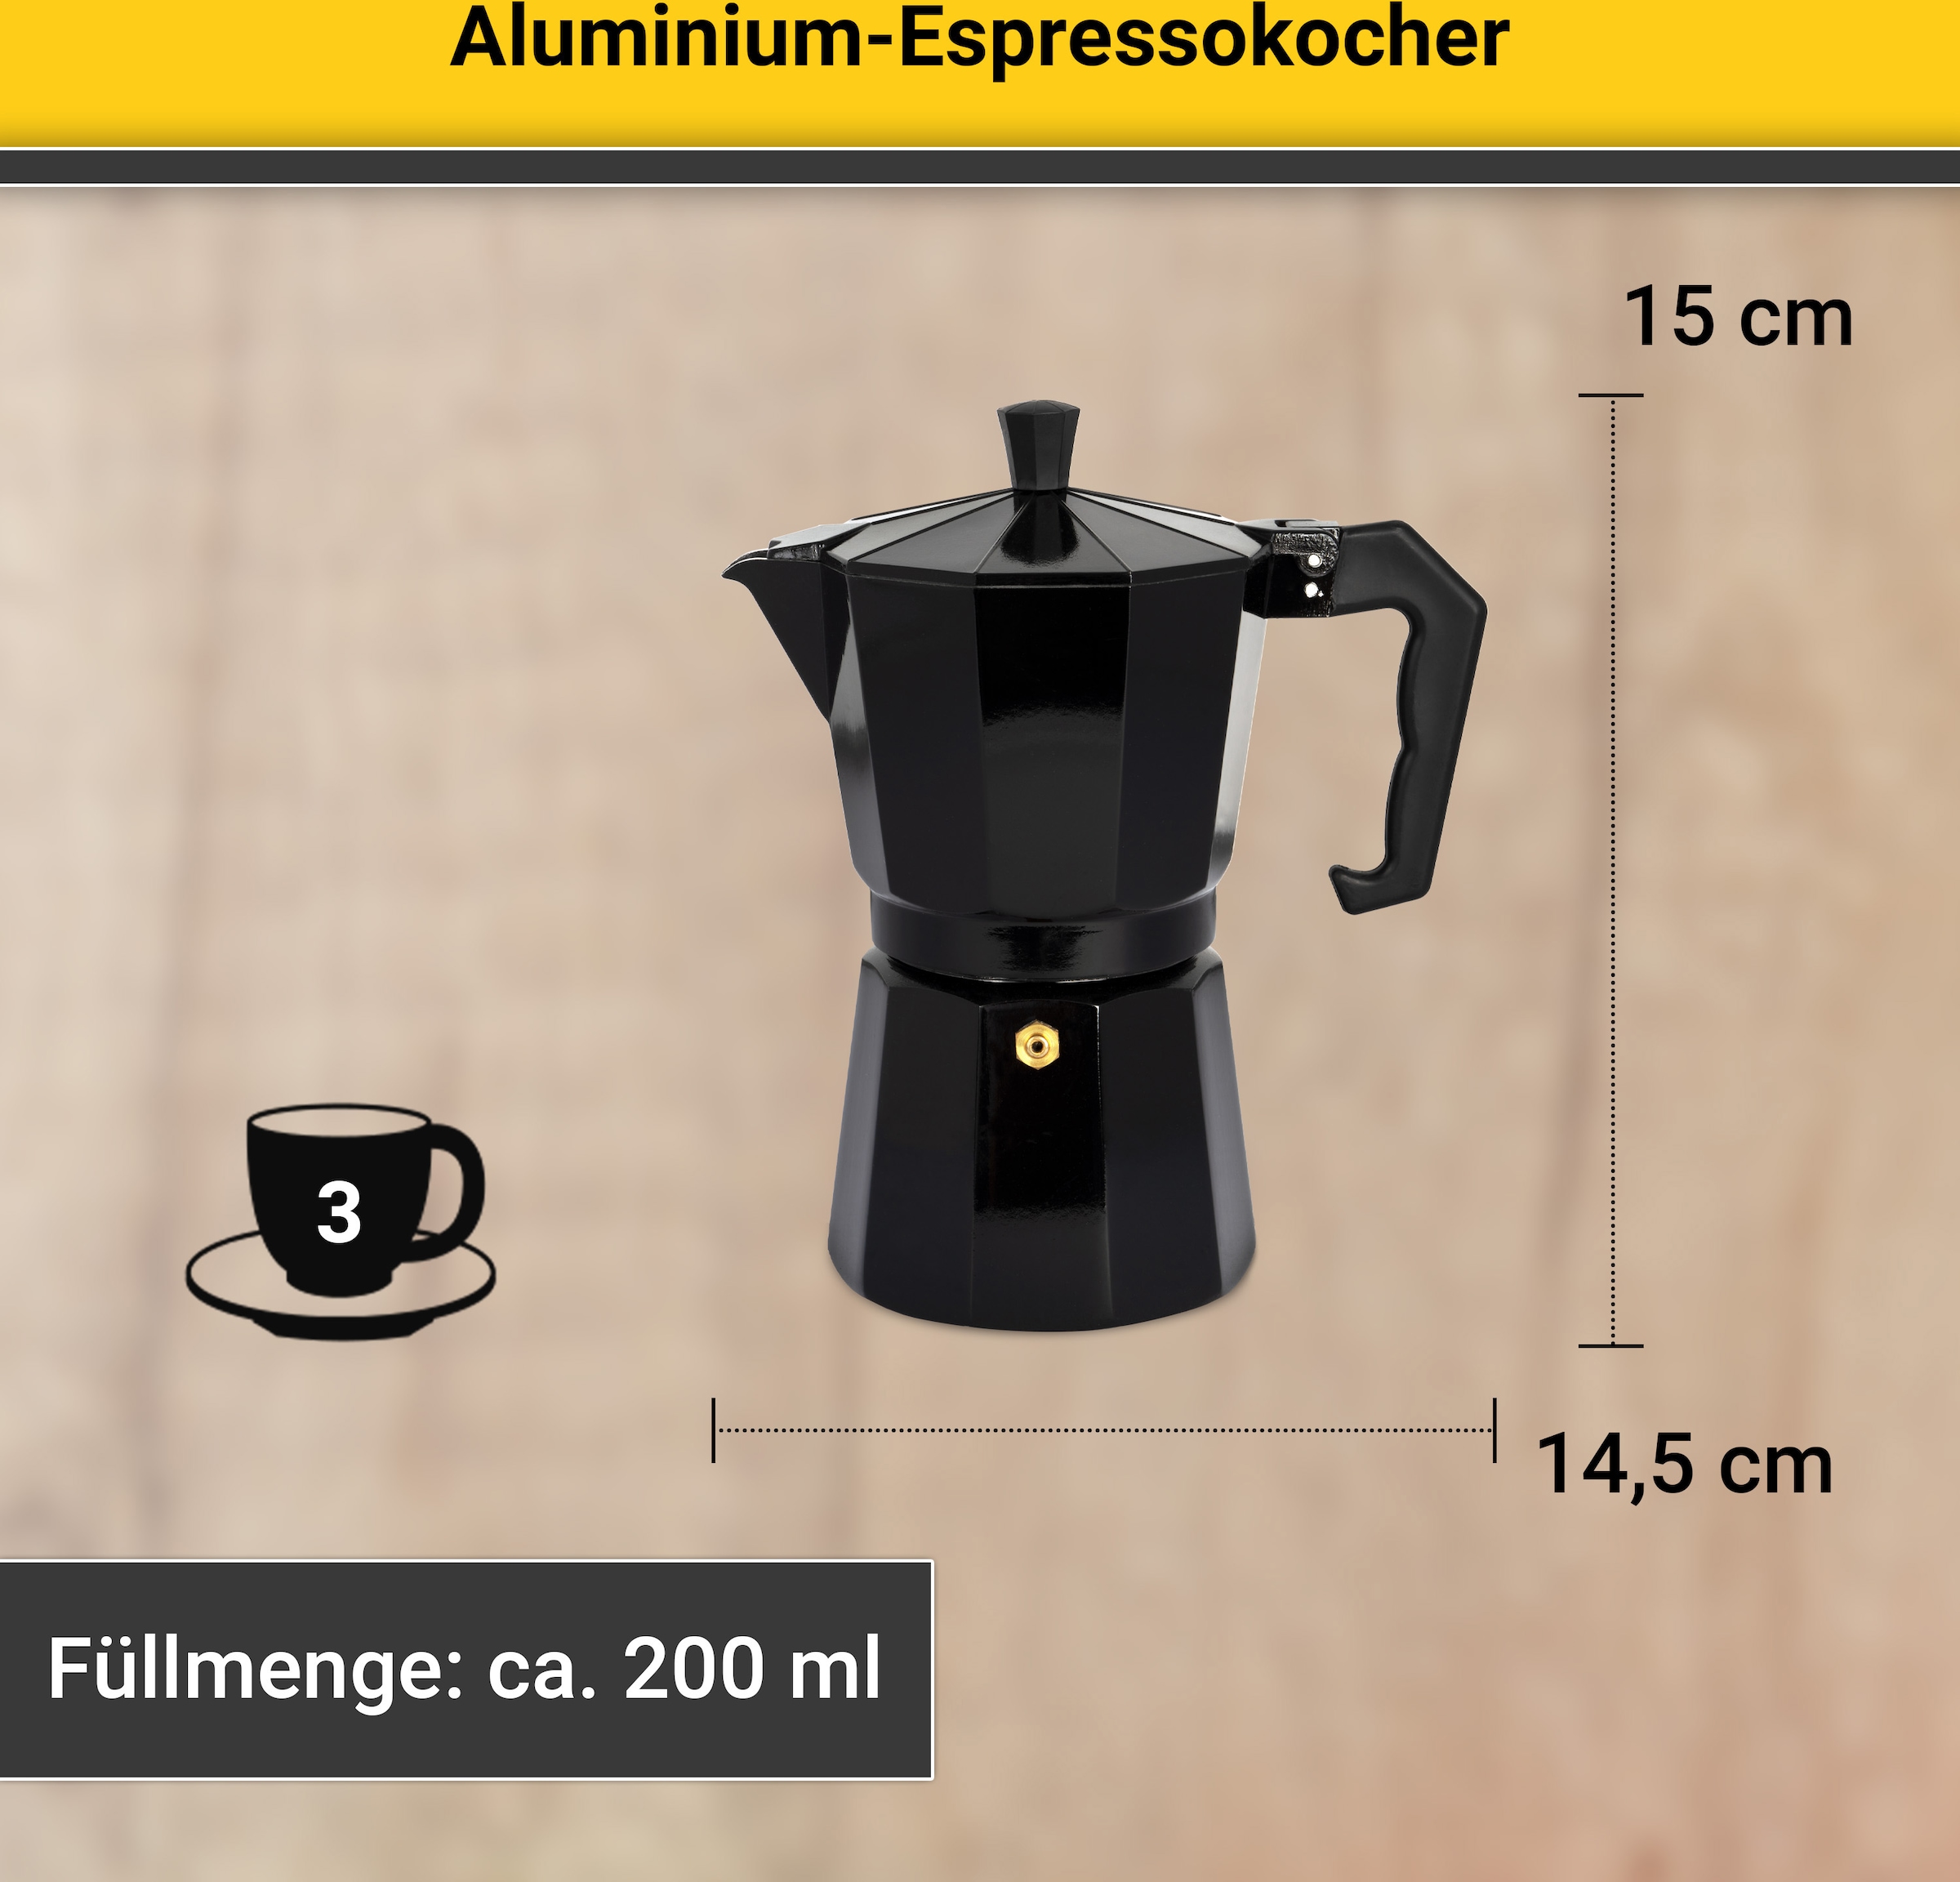 Krüger Espressokocher »Italiano«, 0,2 l Kaffeekanne, traditionell italienisch, aus Aluminium, mit Silikon-Dichtungsring